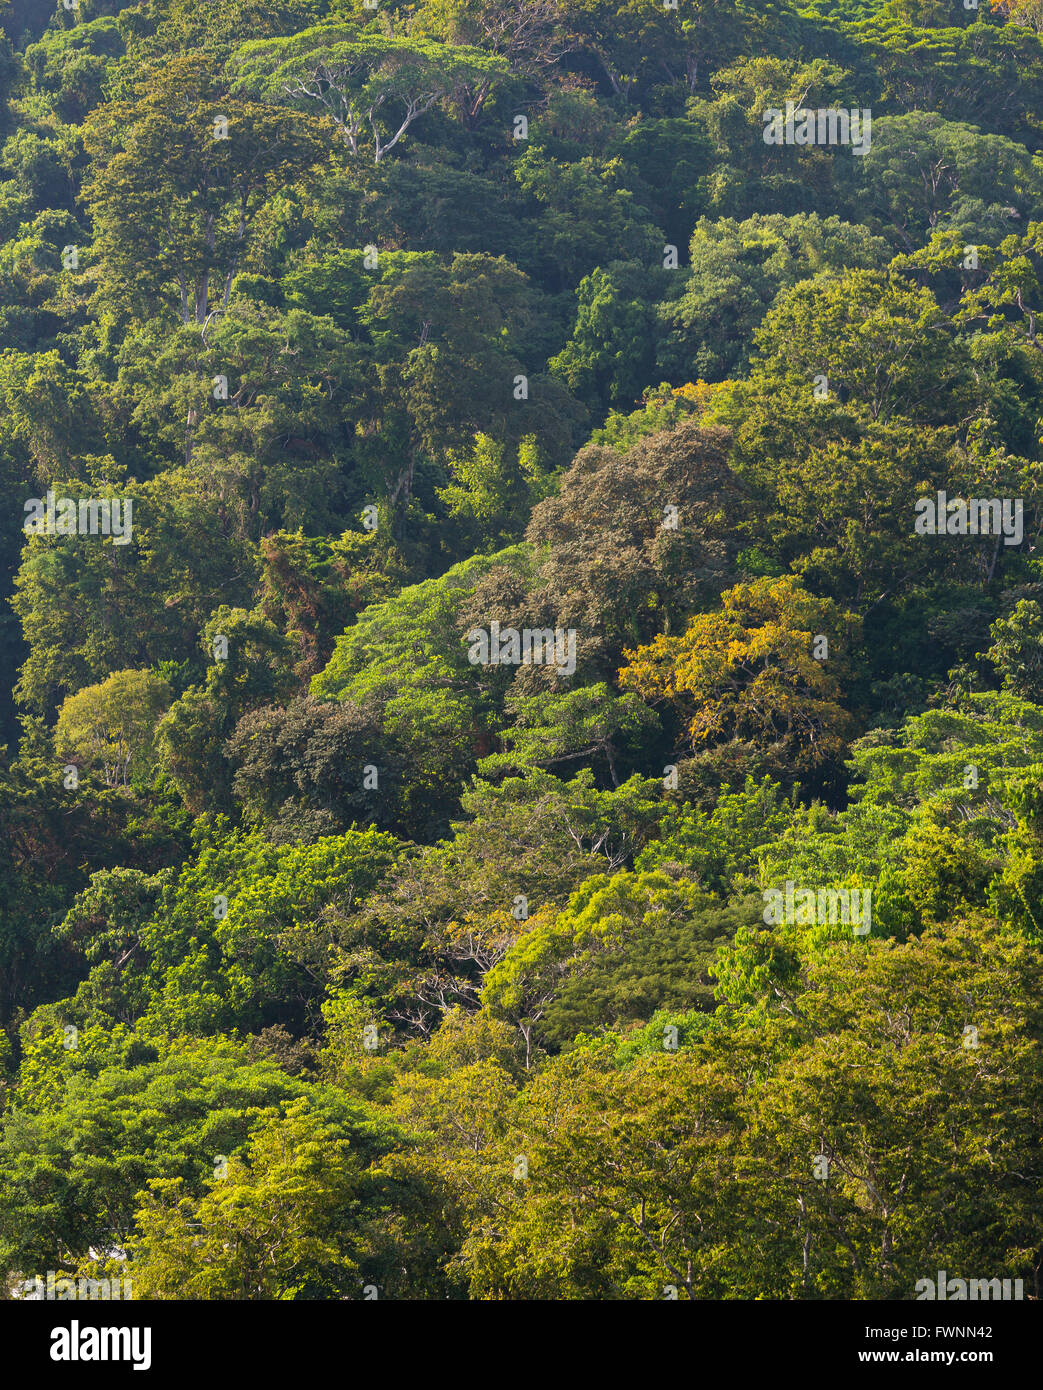 Die Halbinsel OSA, COSTA RICA - Bäumen im Regenwald. Stockfoto